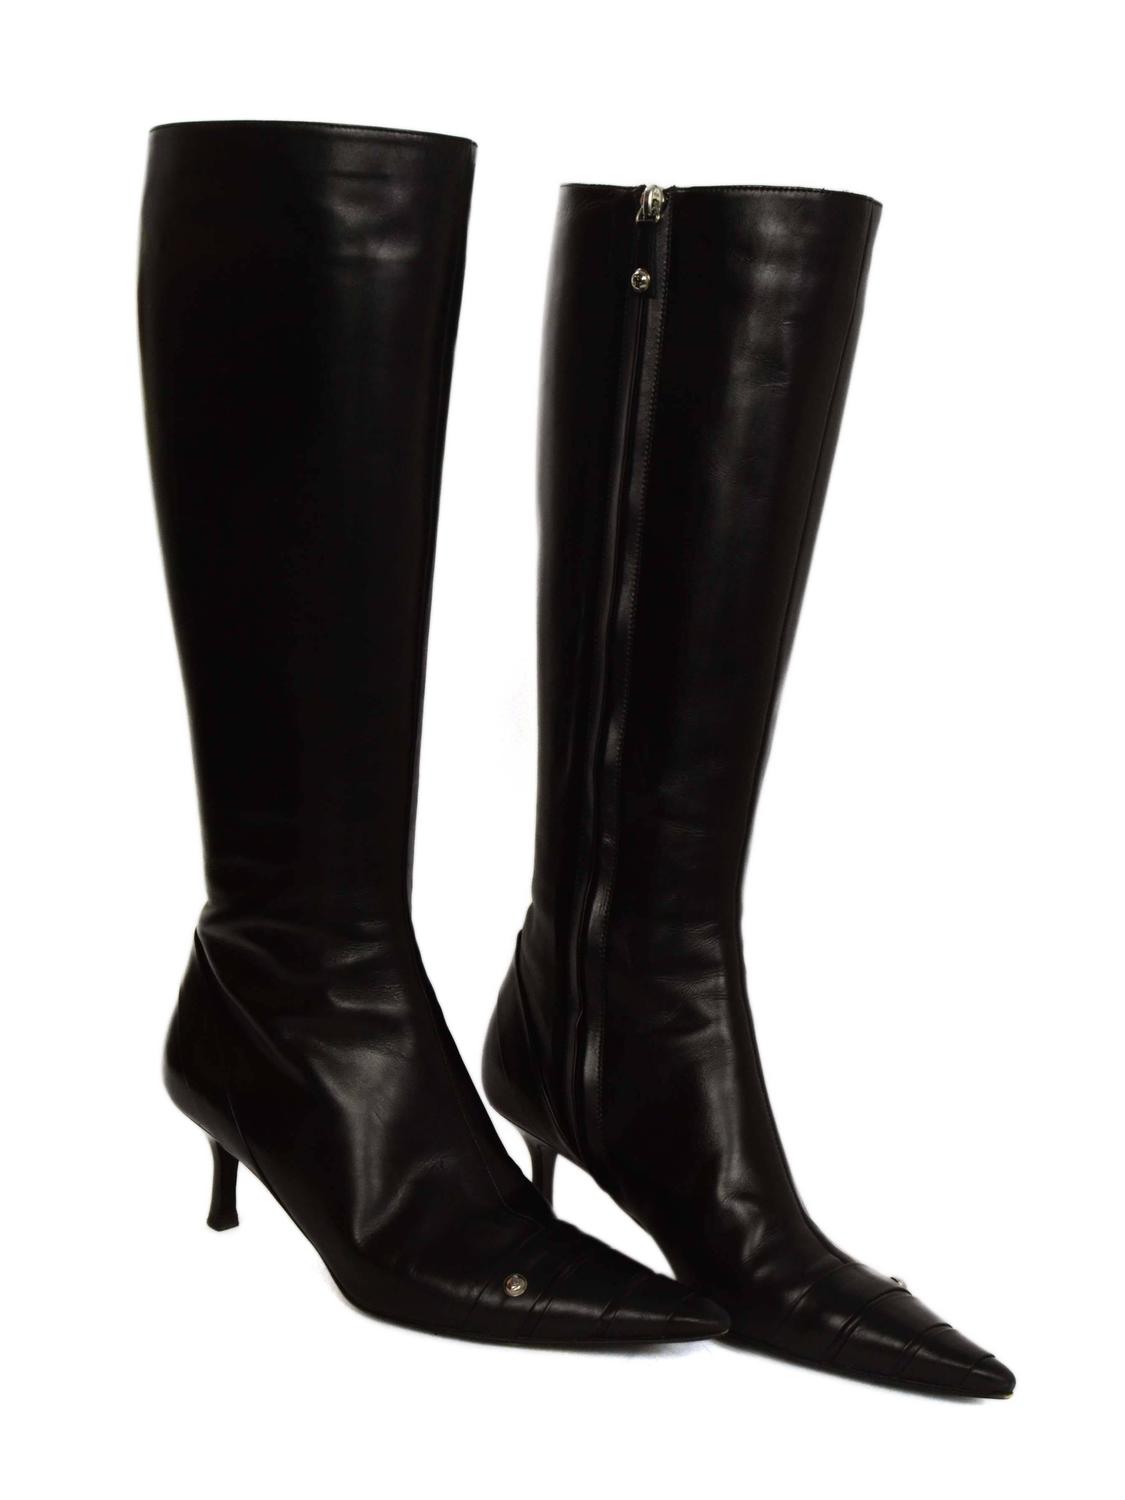 Chanel Black Leather Kitten Heel Knee-High Boots sz 38 at 1stdibs